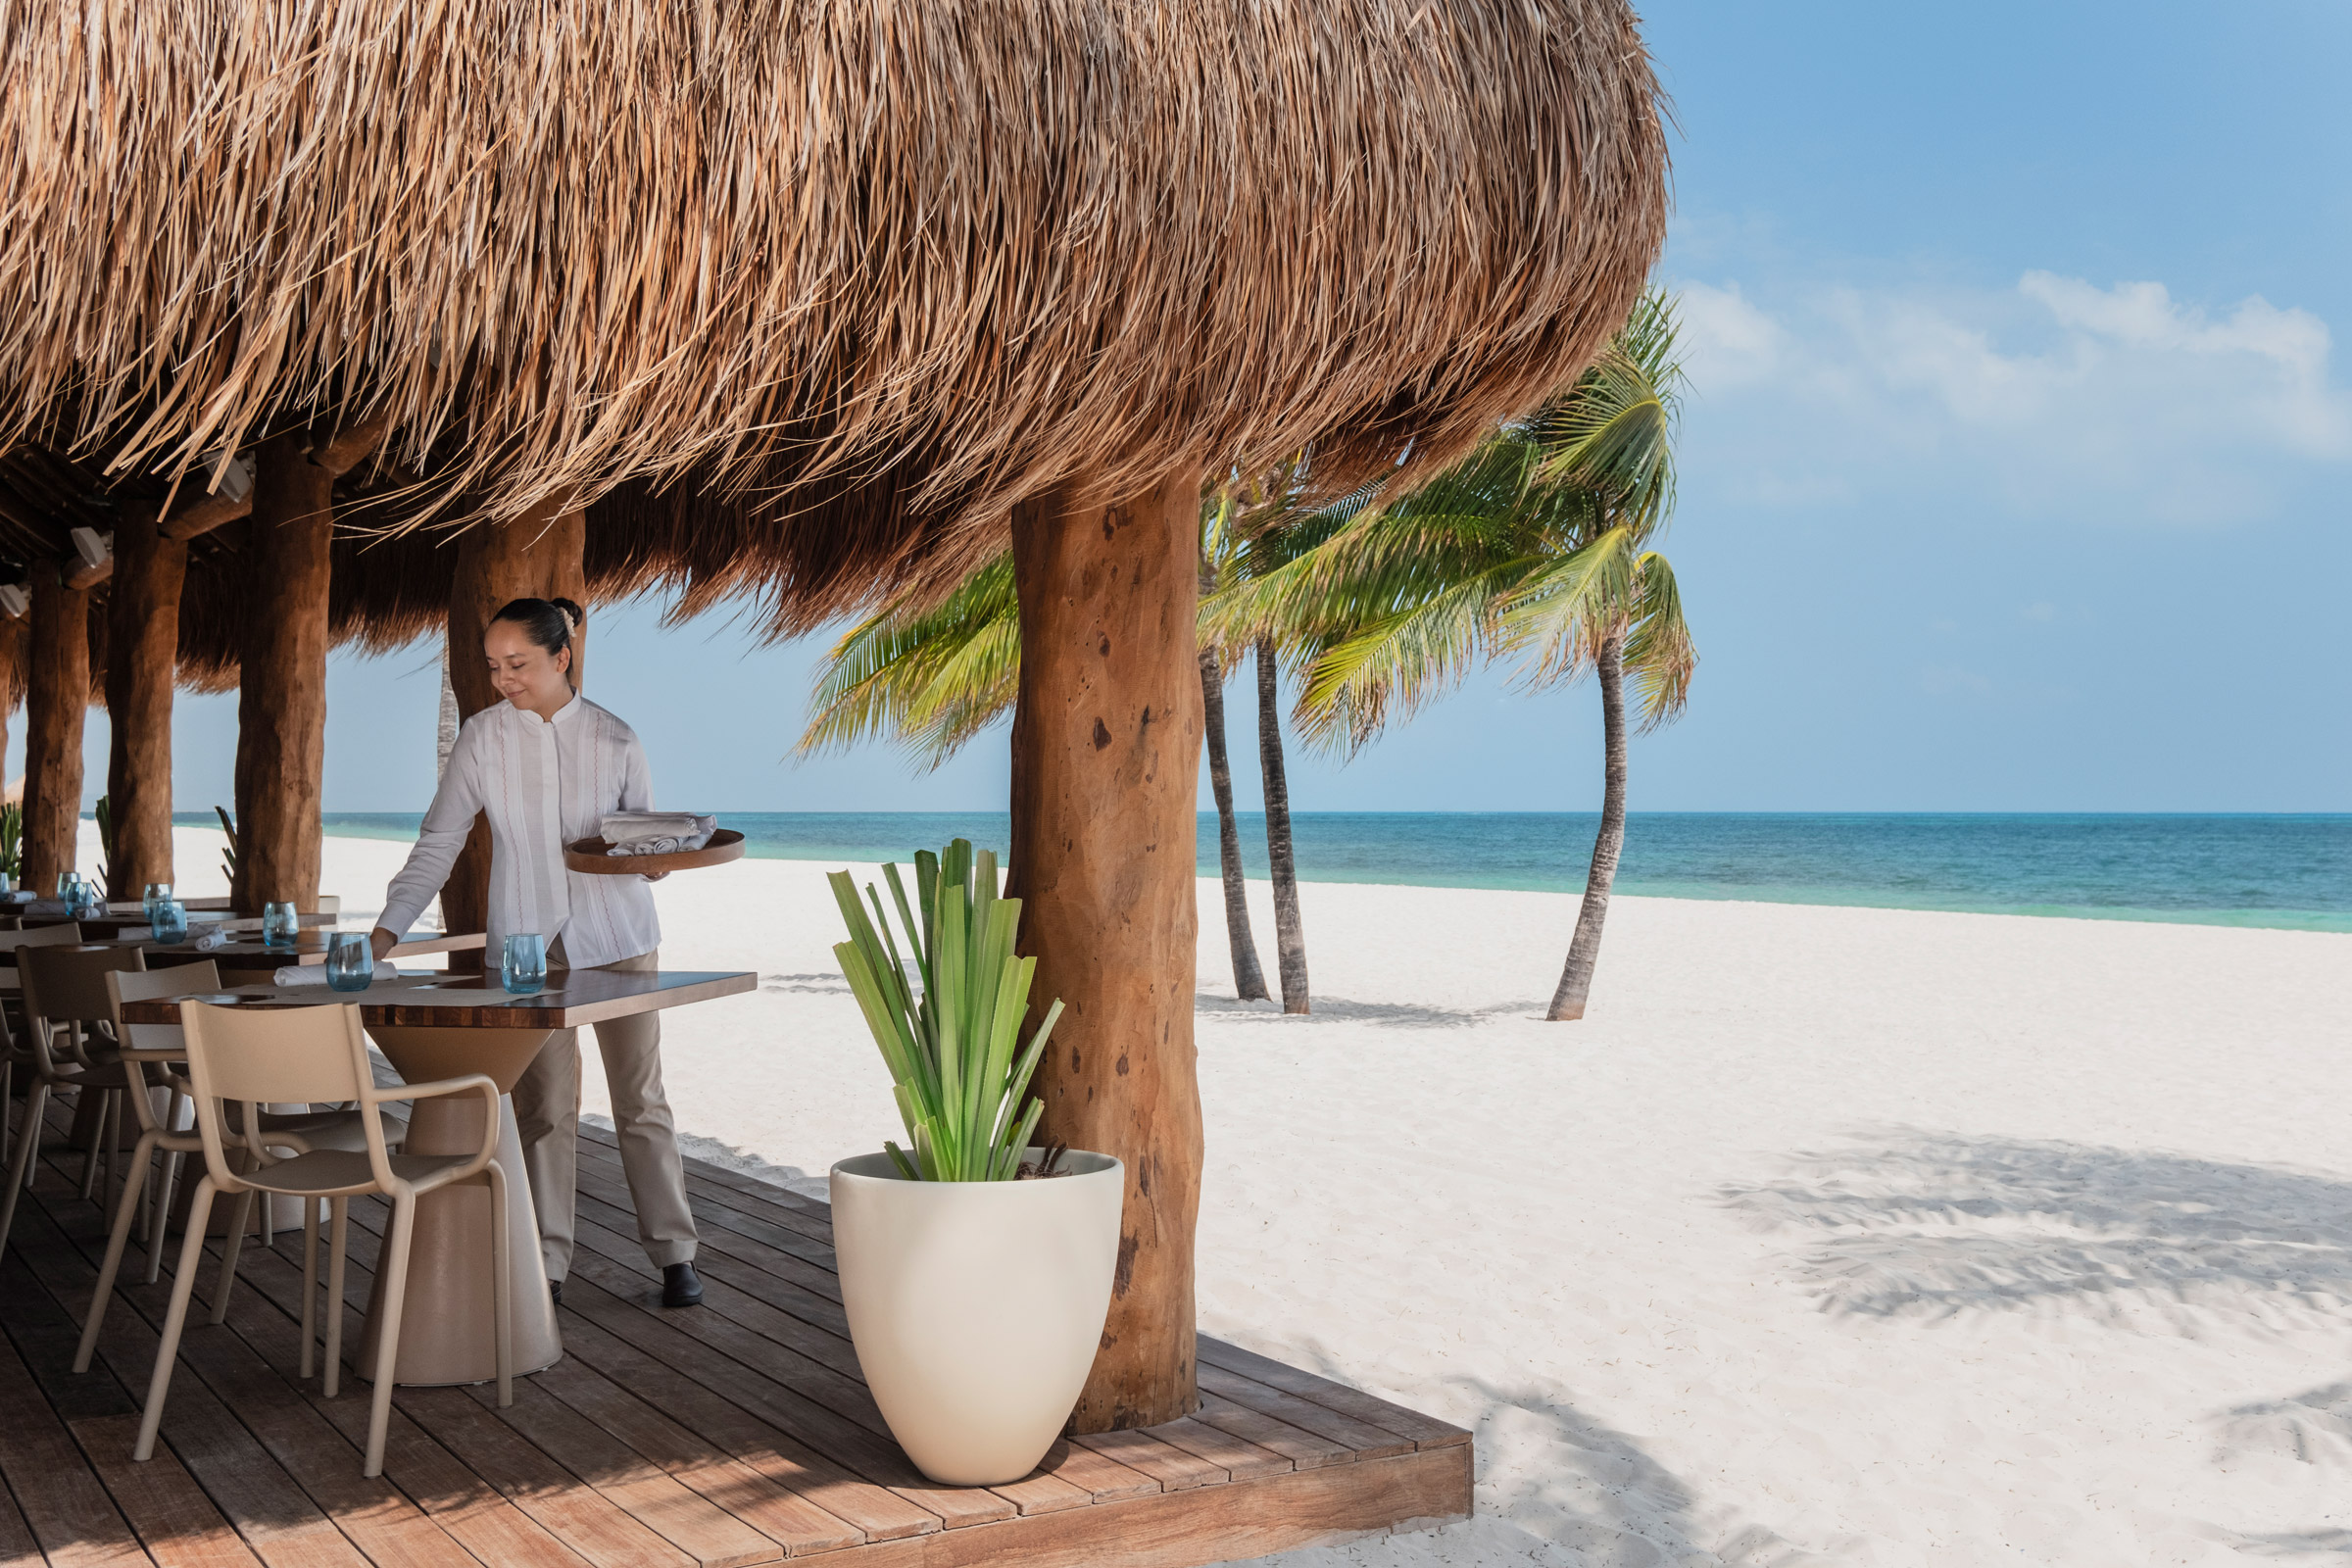 Restaurant by the beach in Cancun